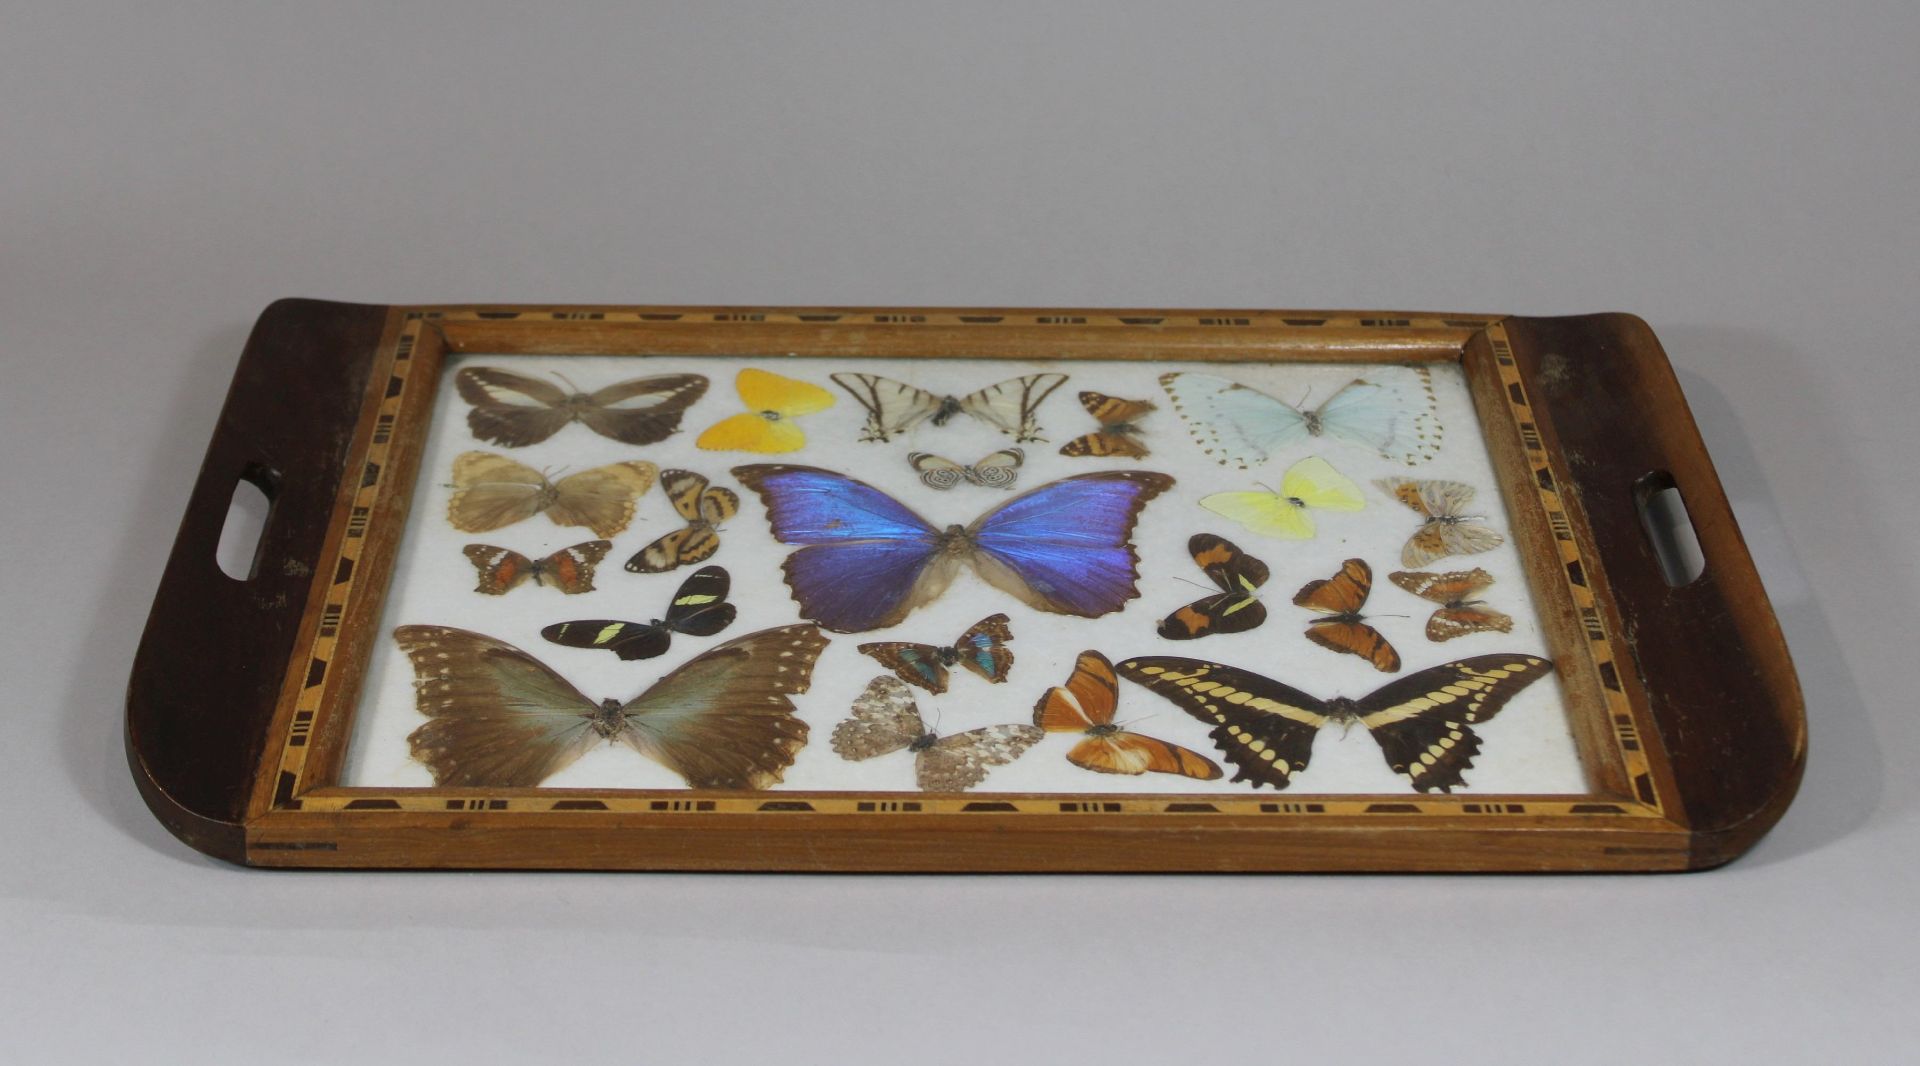 Tablett mit Schmetterlingen, Holz, um 1930, Brasilien, wohl Hugo Curiosities, Maße: 52 x 33 cm. Alt - Image 2 of 2